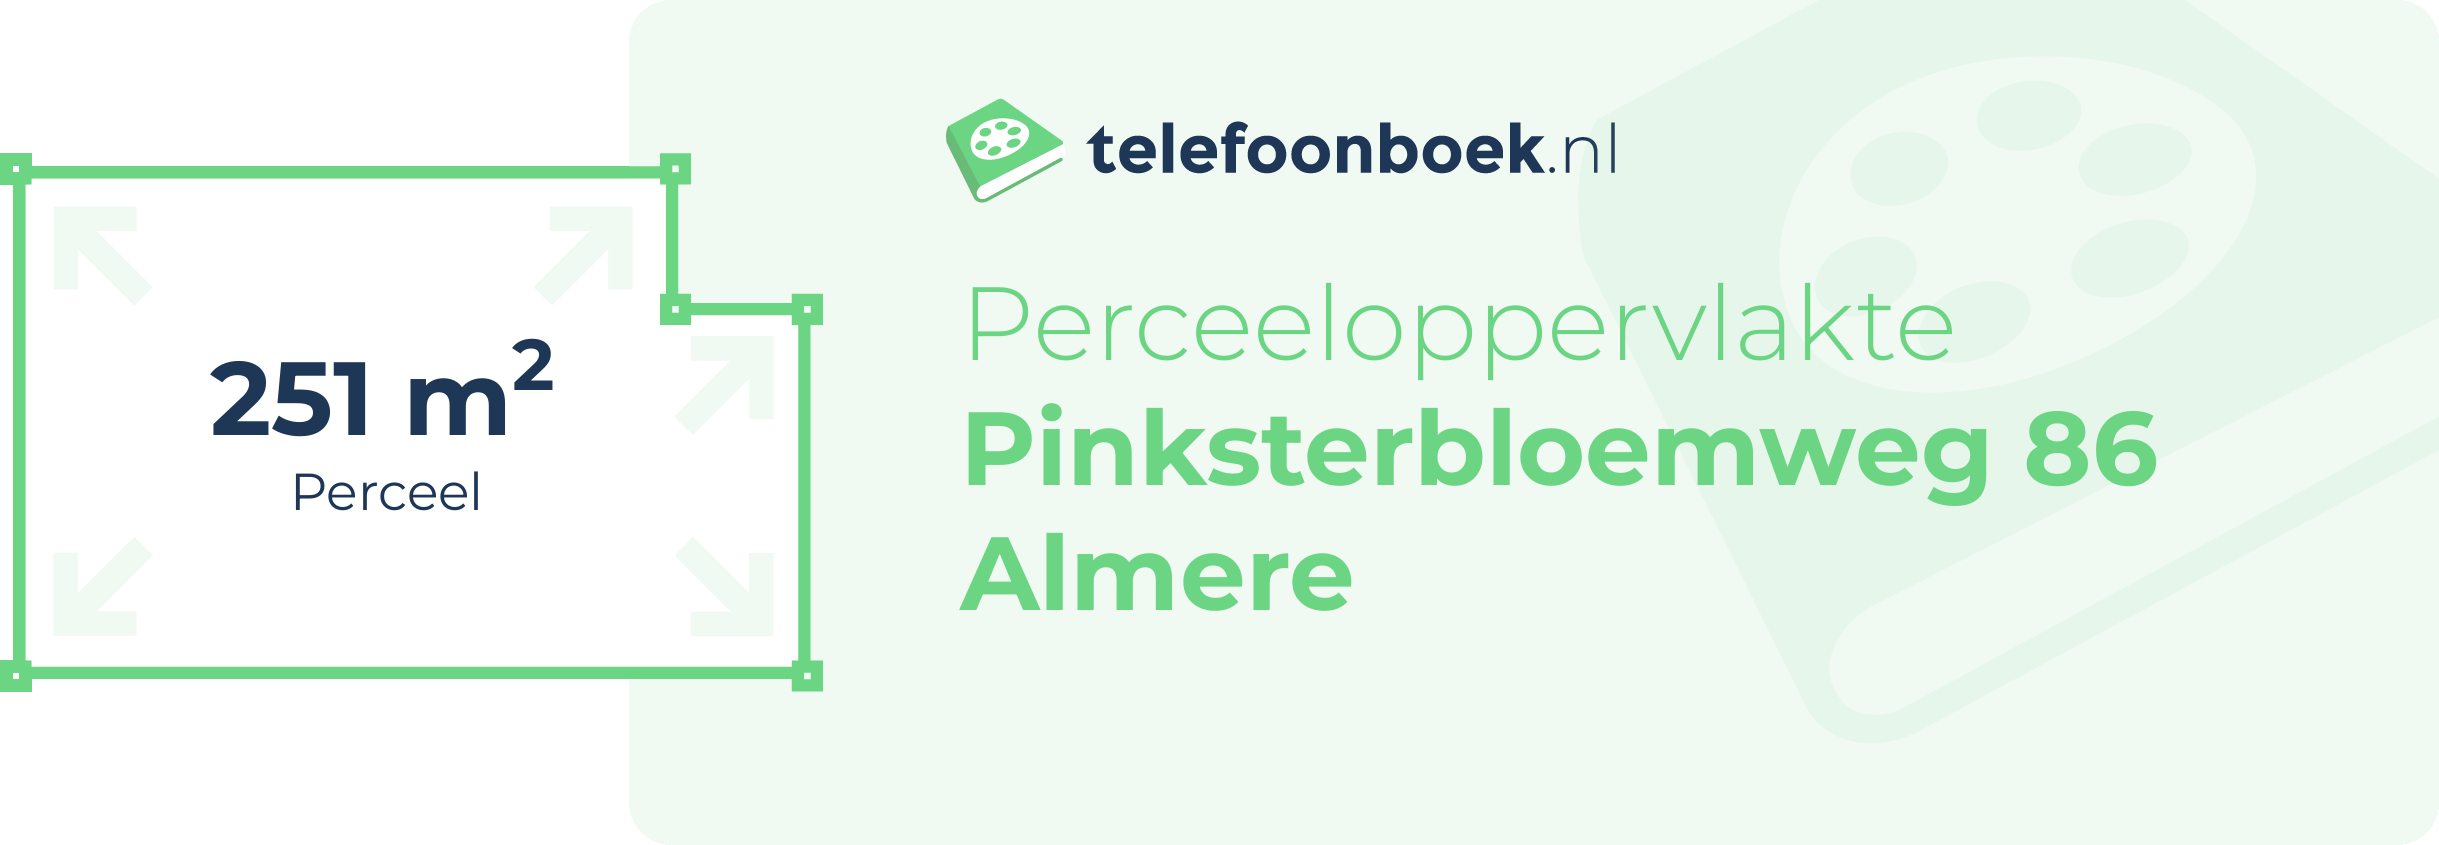 Perceeloppervlakte Pinksterbloemweg 86 Almere